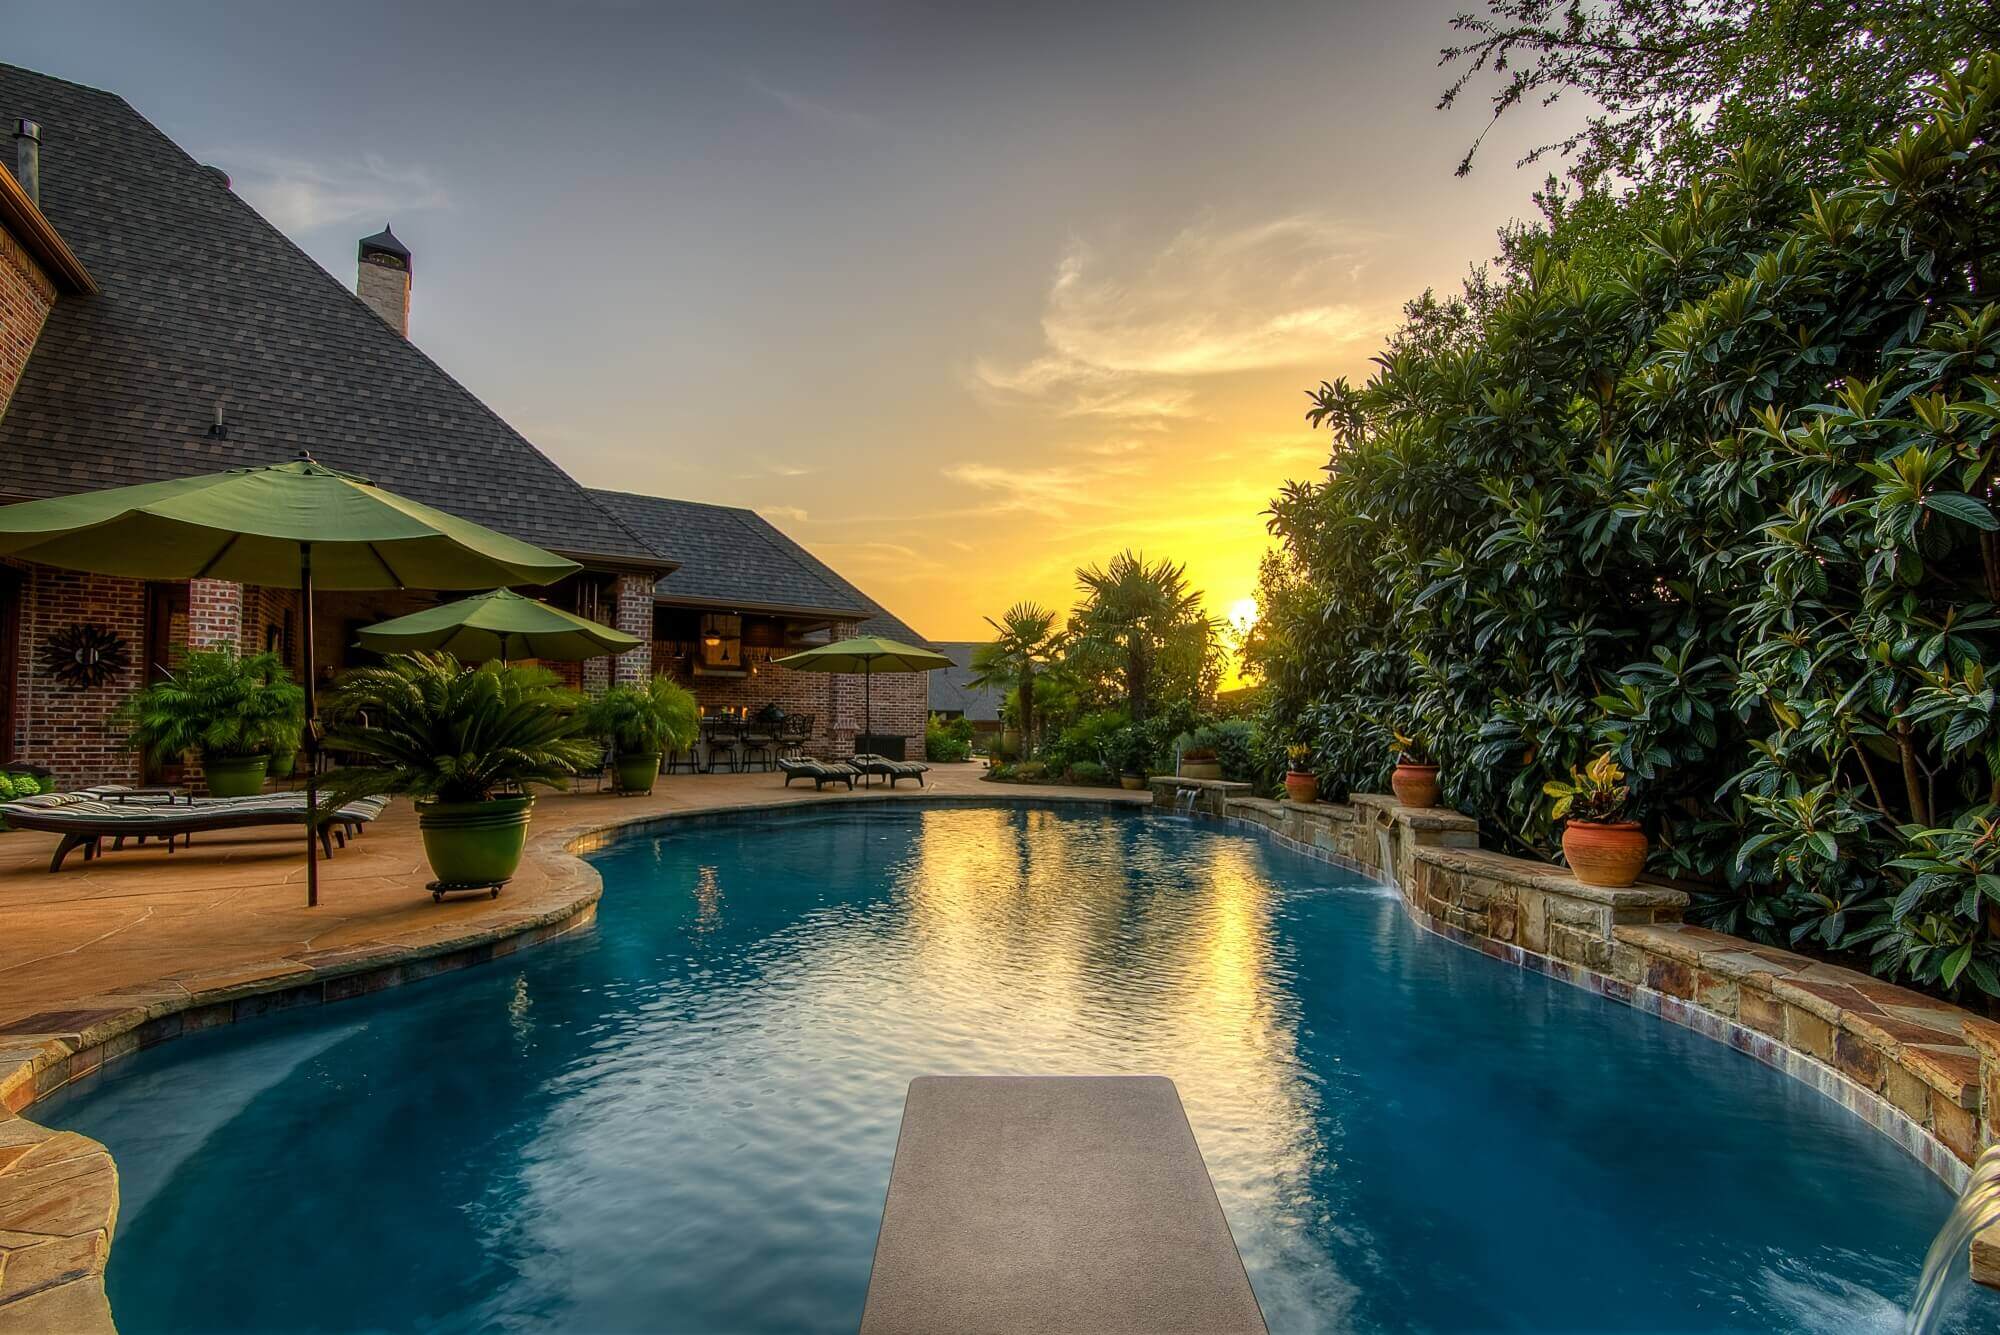 Pool paradise custom backyard retreat Texas sunset